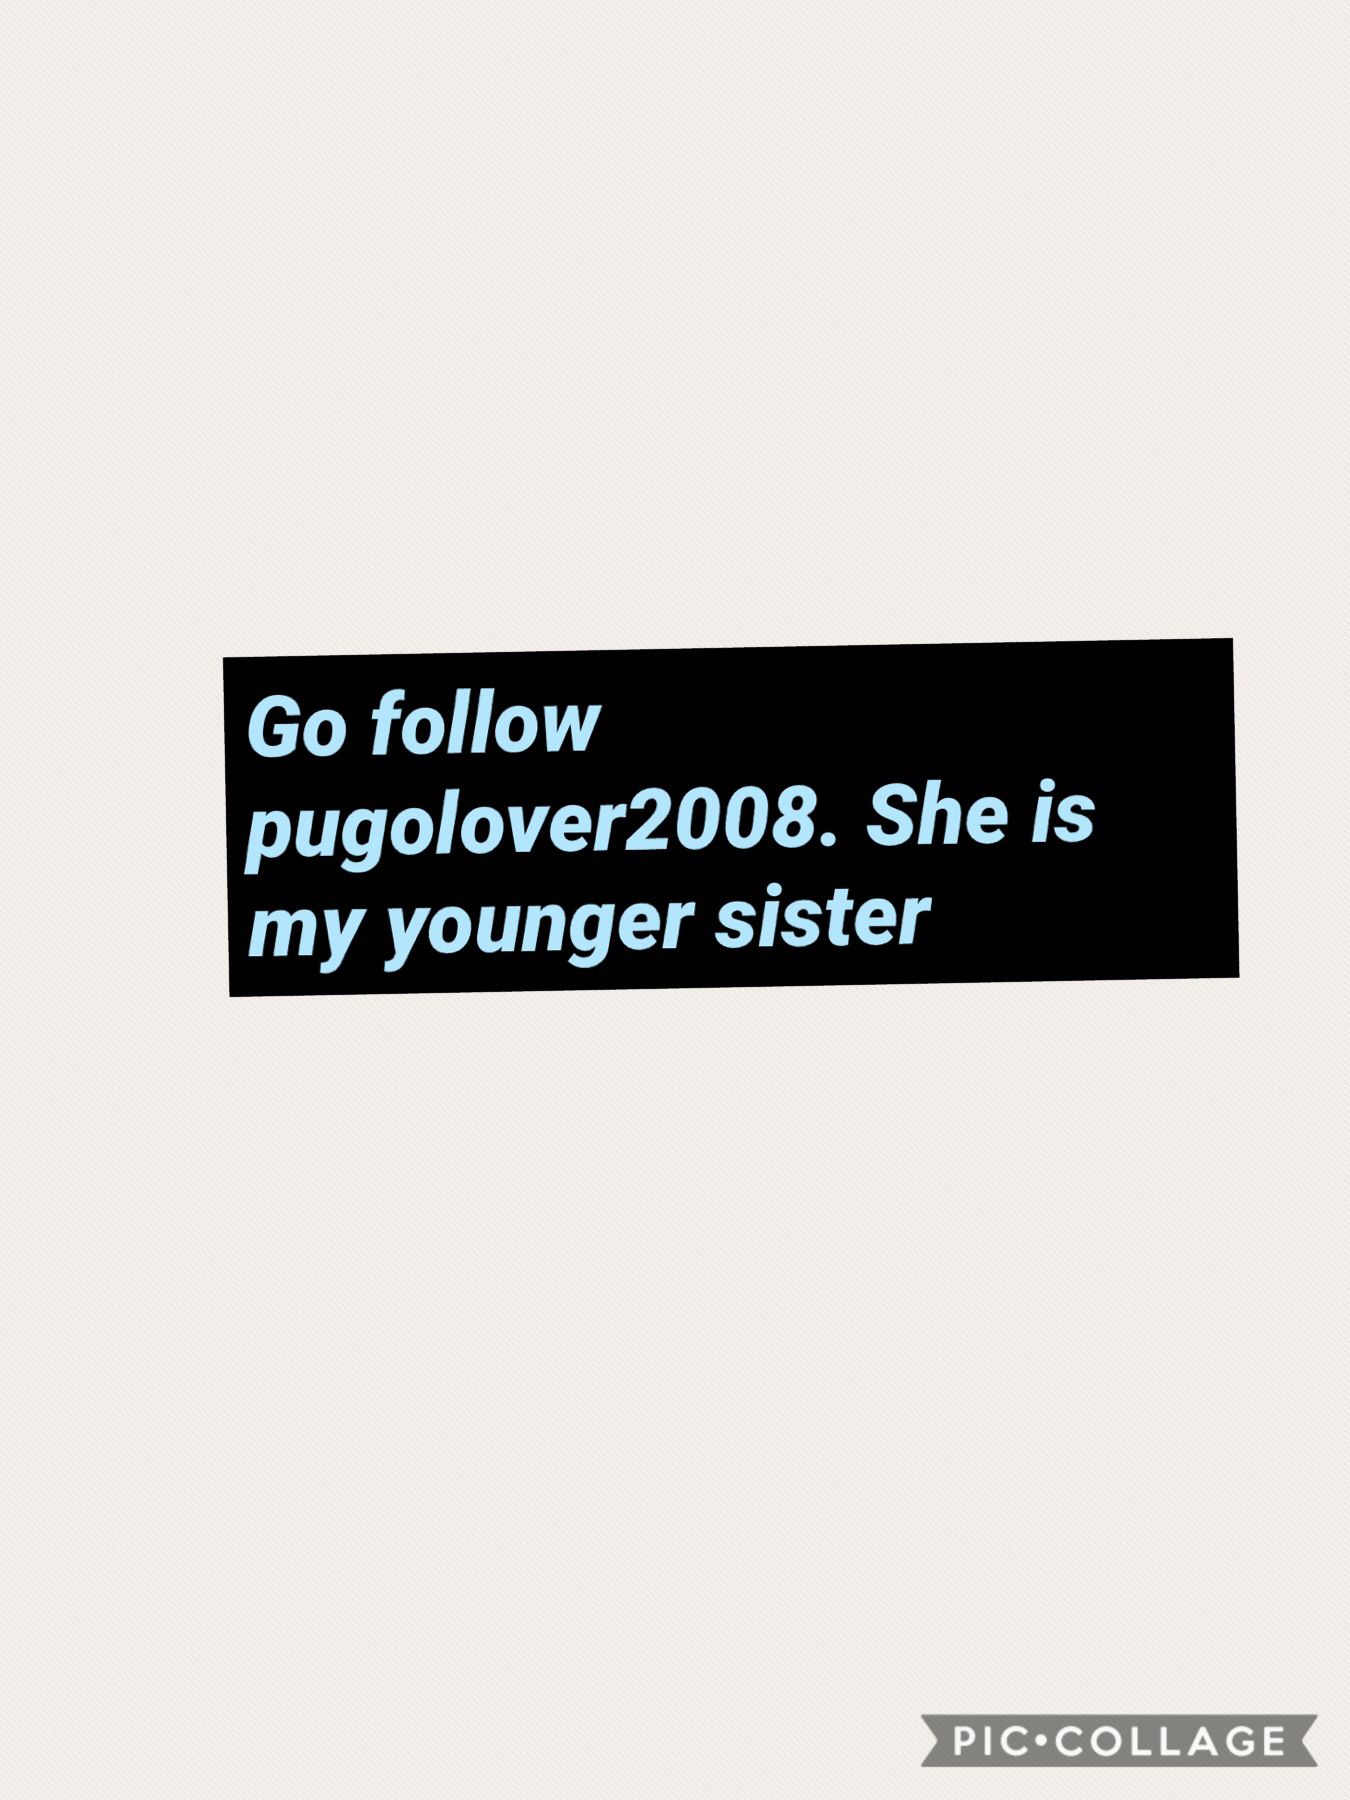 👧👧

Go follow my sister pugolover2008